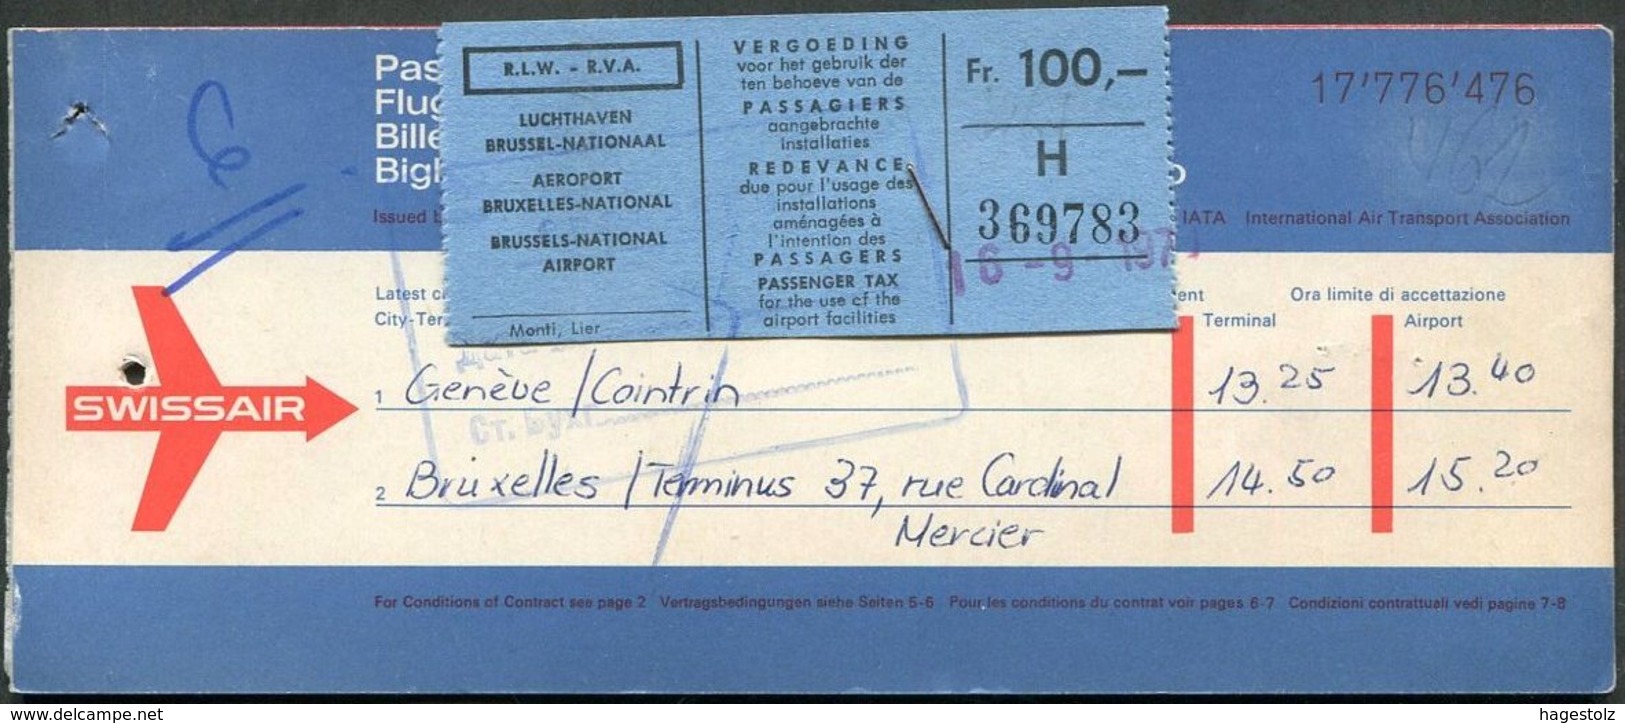 SWISSAIR Airline 1970 Air Passenger Ticket Flugticket Billet D'avion WATCHES Adv Brussels AIRPORT TAX Fee Revenue Fiscal - Europe